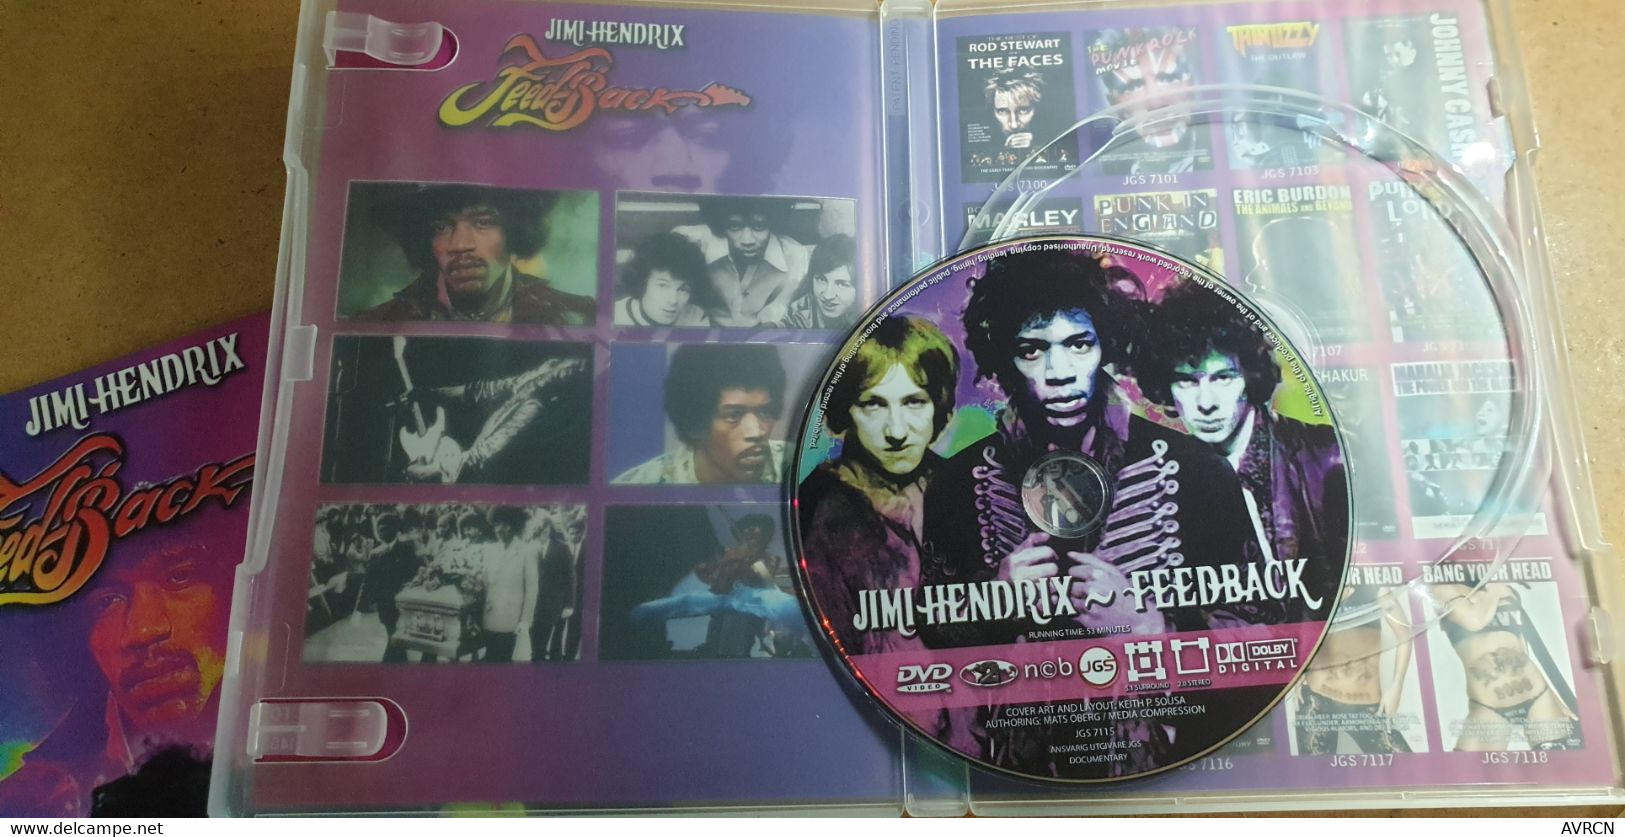 JIMI HENDRIX - FEEDBACK - DVD « NCB-JGS 7115 ». - Music On DVD